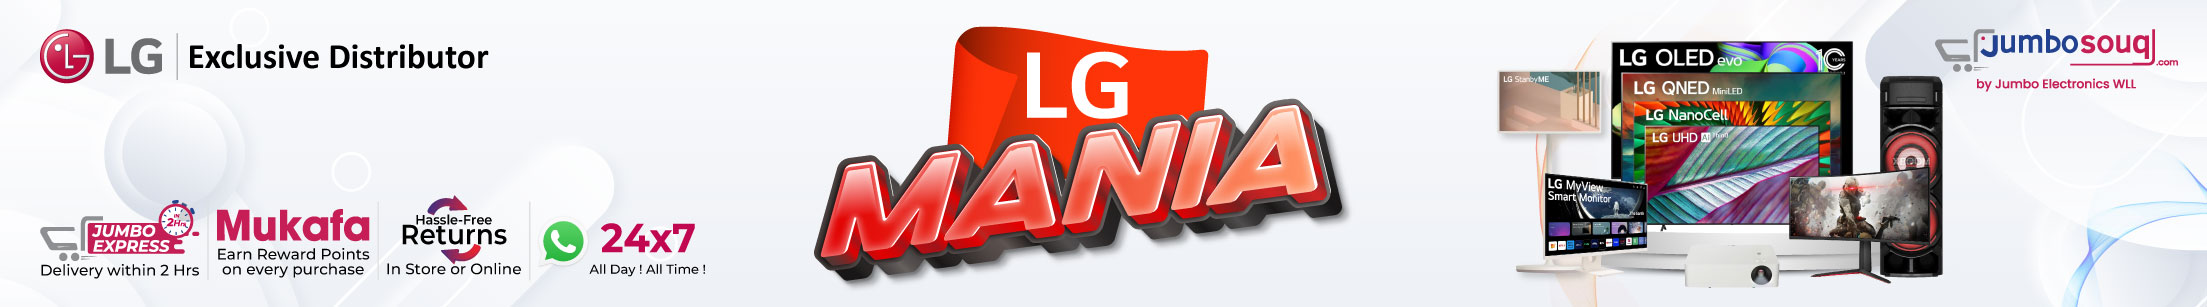 LG Mania